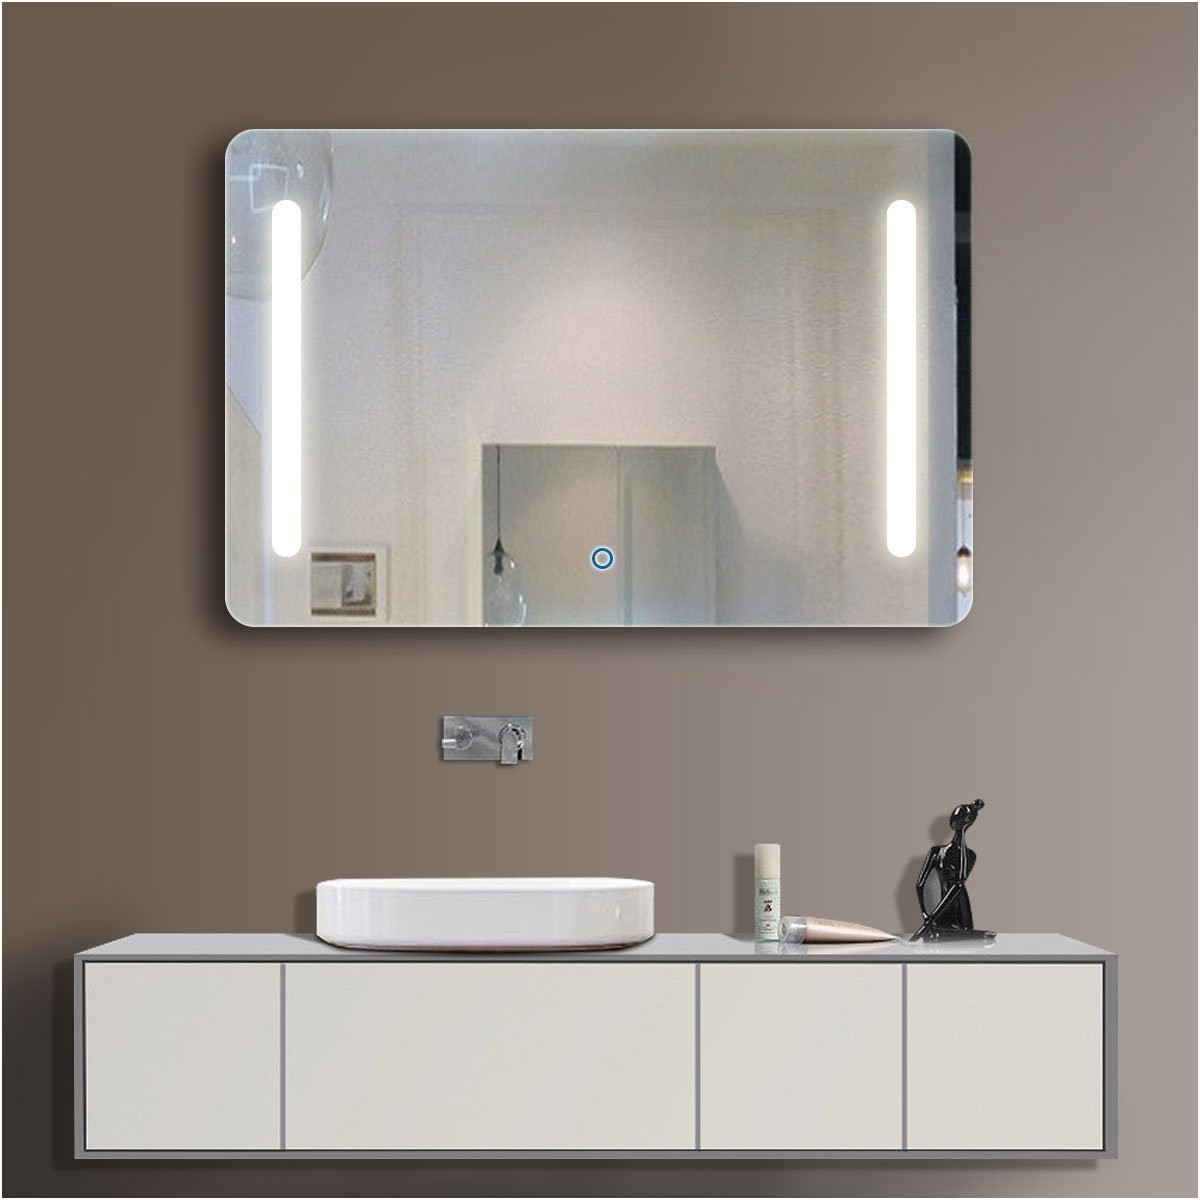 Luxury 2 Way Mirror In Bathroom